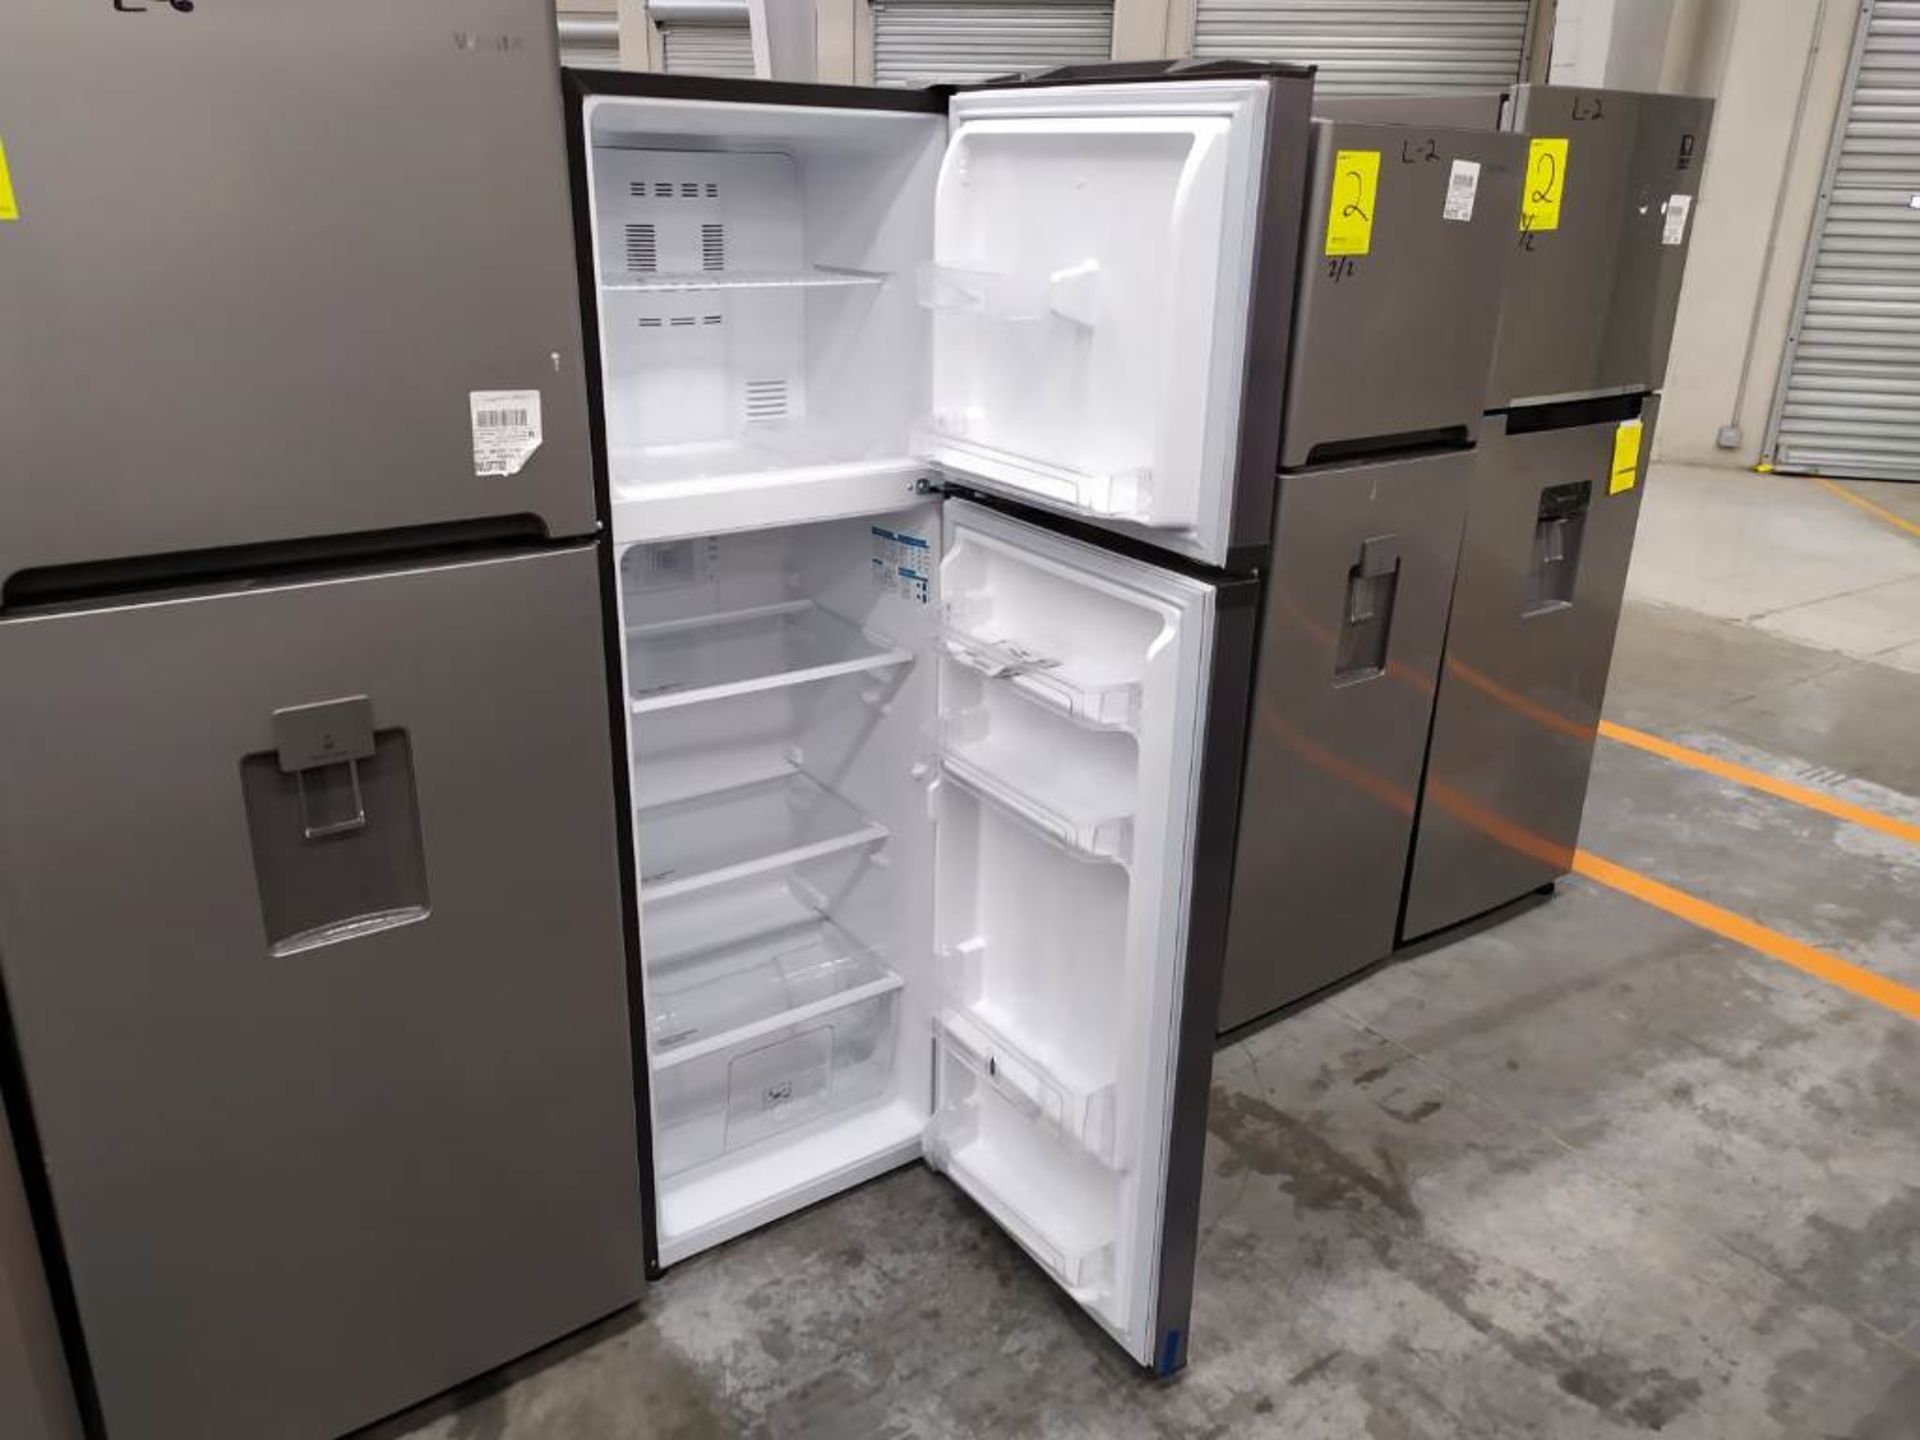 2 Refrigeradores, uno Marca Mabe, Modelo RMT510RY, Serie 2107B401729, Color Negro con dispensador d - Image 9 of 11